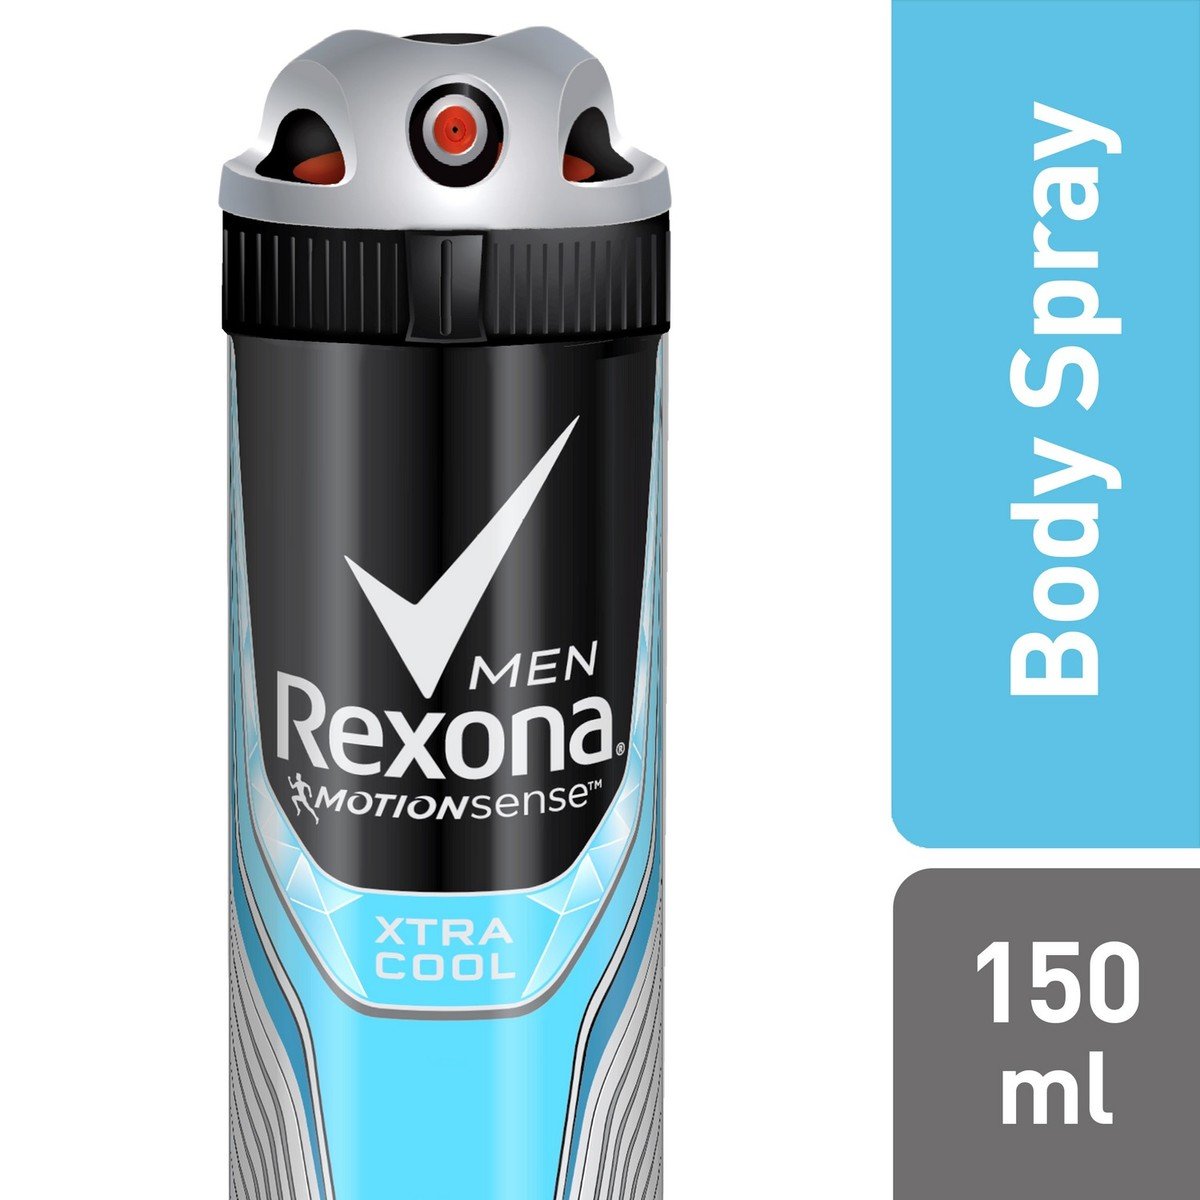 Rexona Men Anti-Perspirant Deodorant Xtra Cool 150 ml